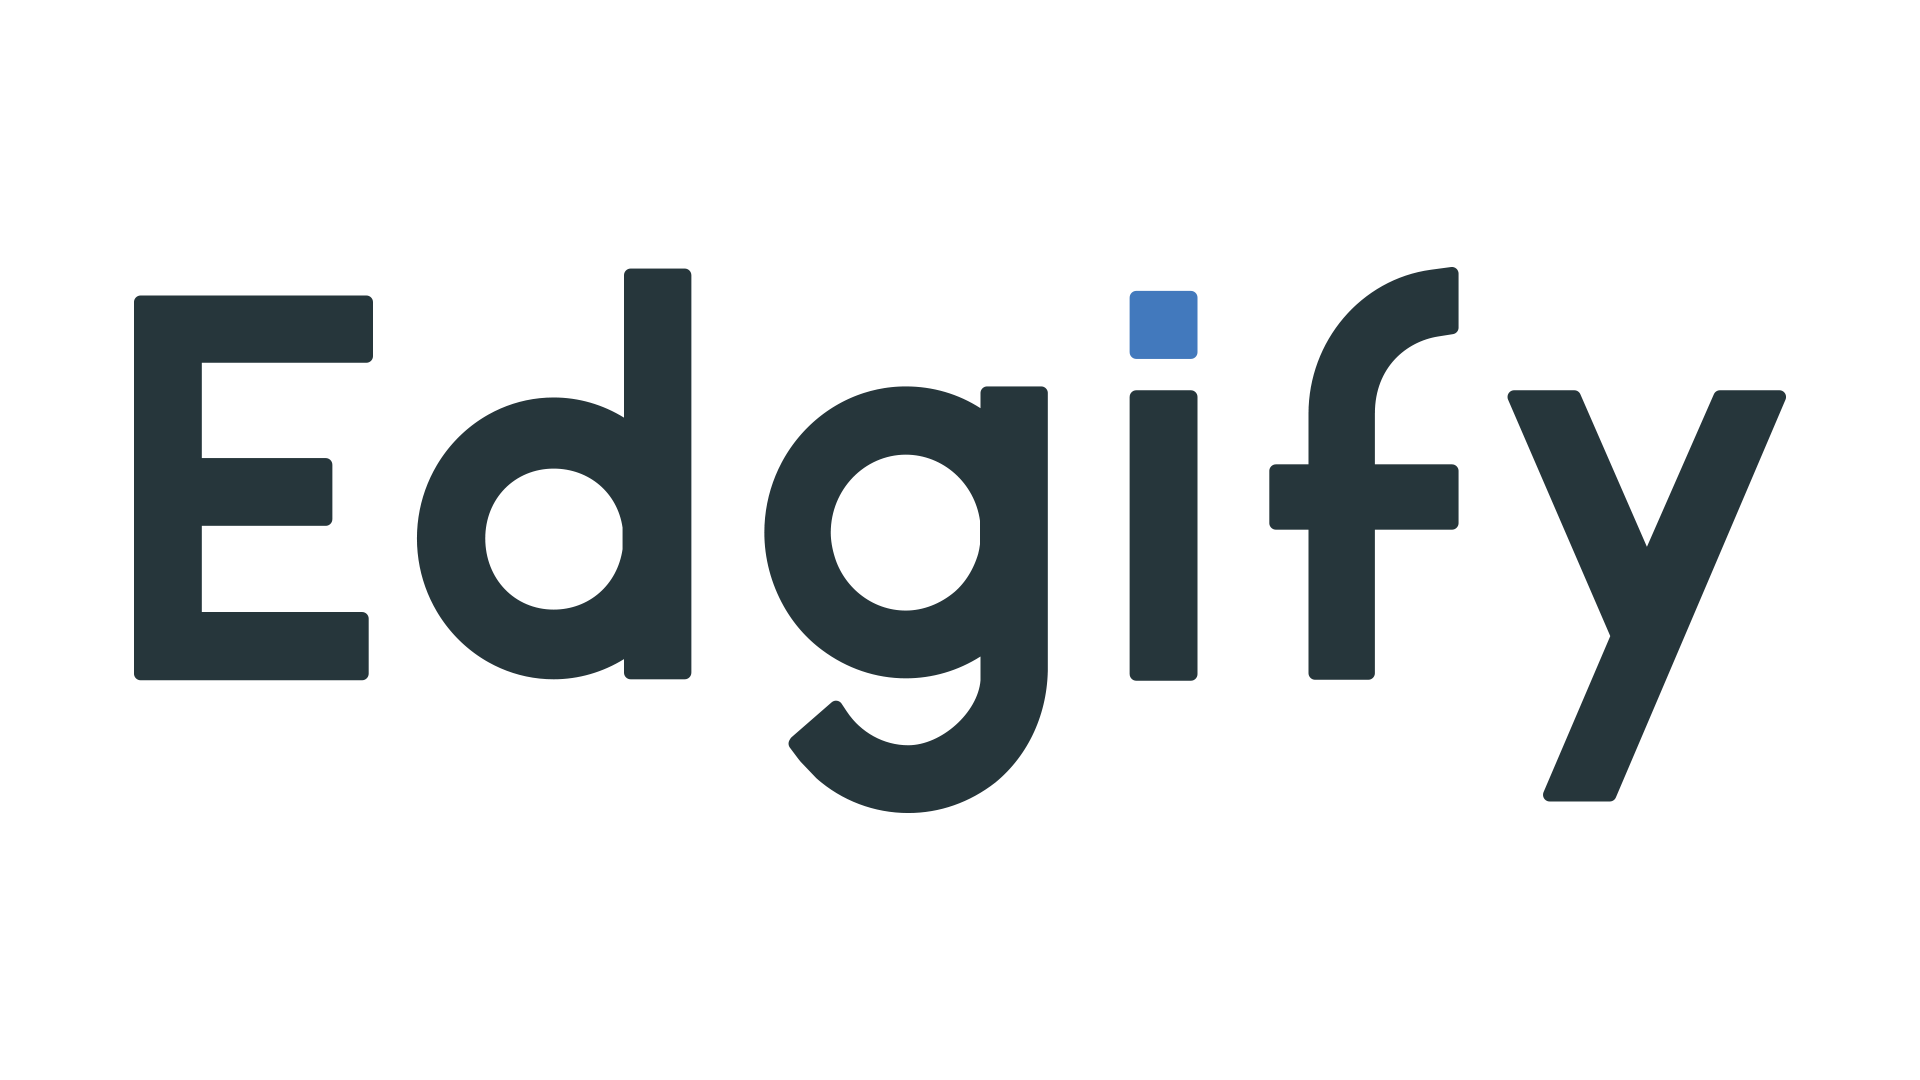 Edgify logo